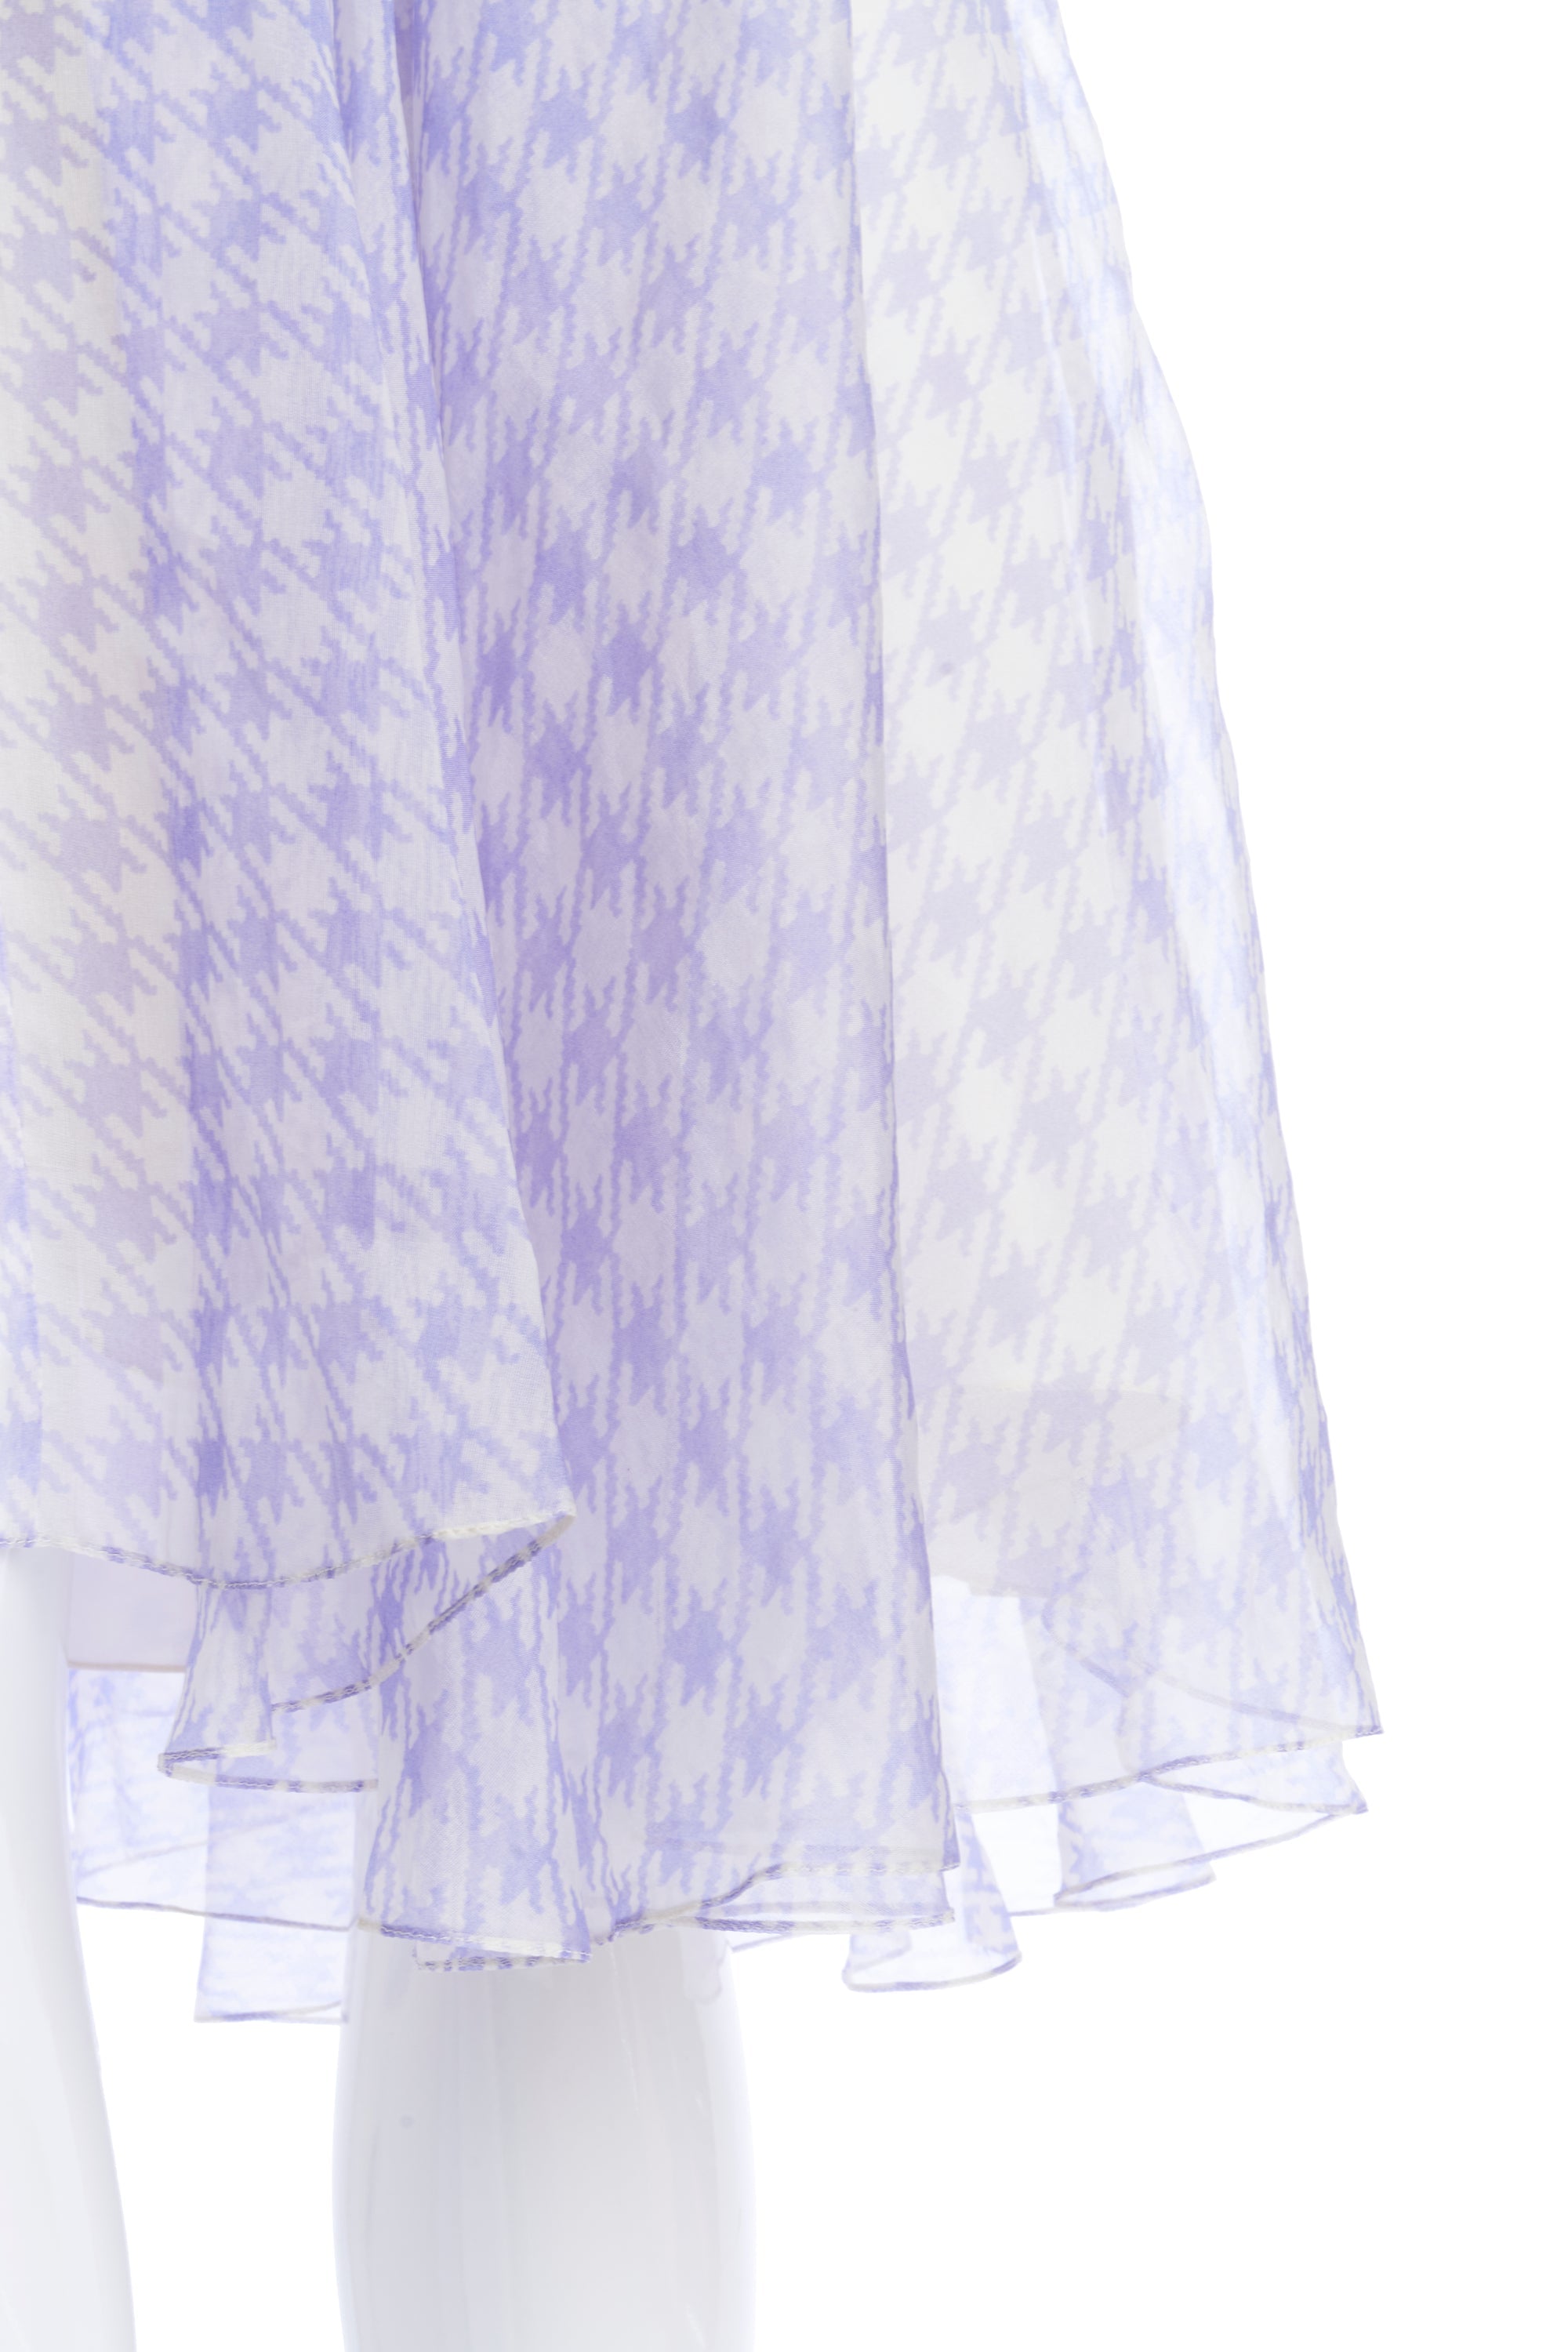 Christian Dior John Galliano Lavender Dress Y2K Size 40